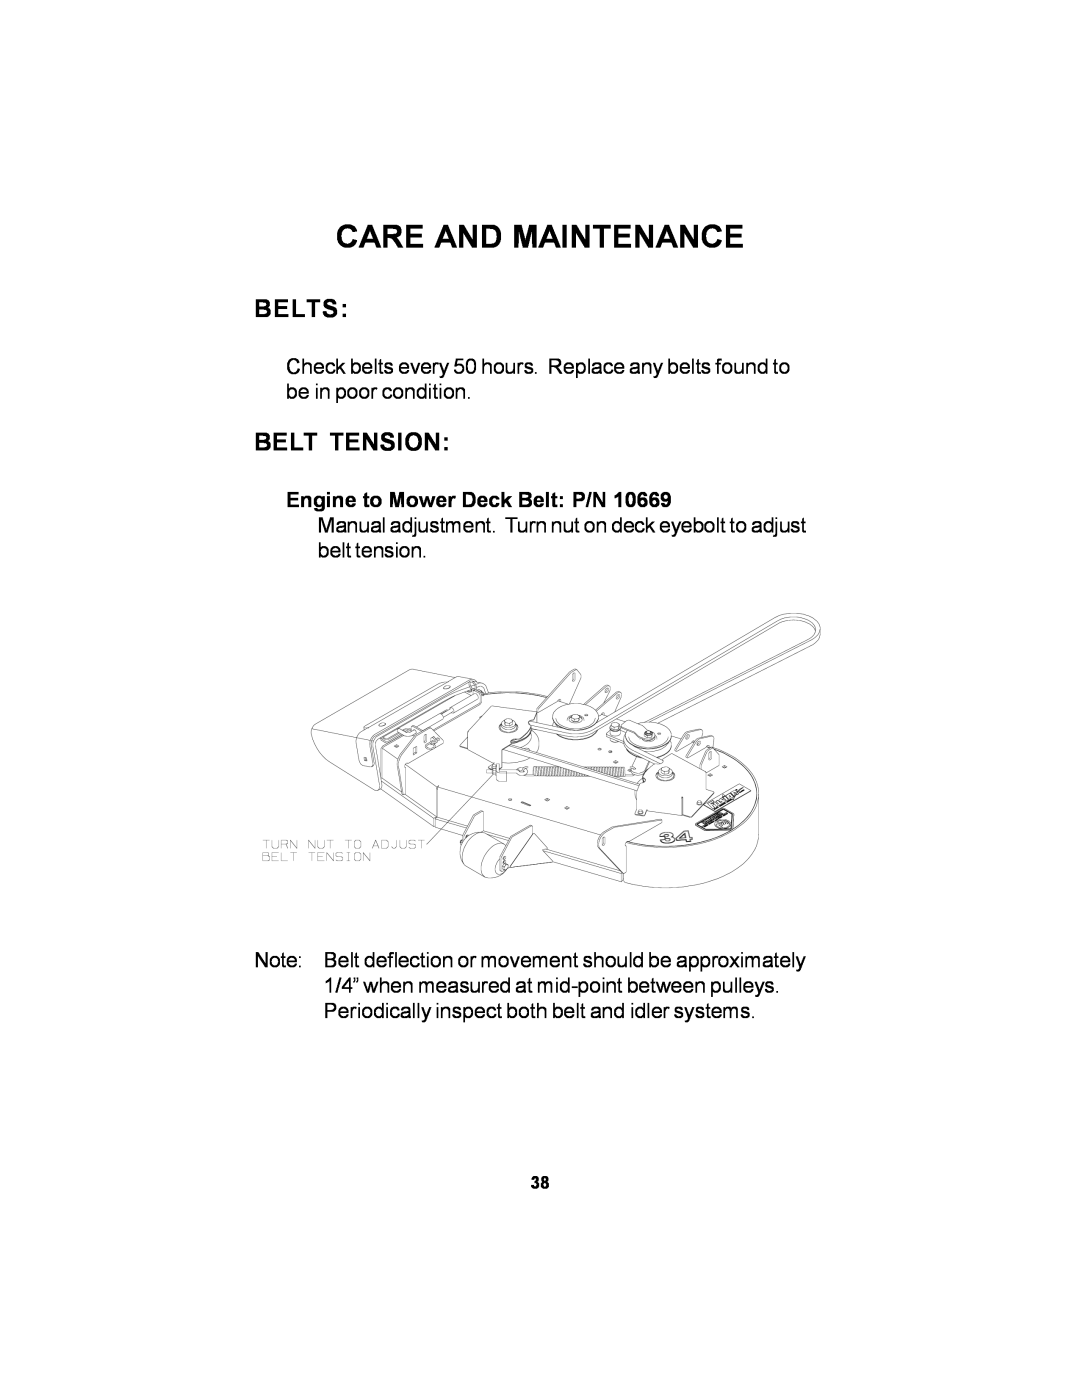 Dixon Black Bear manual Belts, Belt Tension, Care And Maintenance, Engine to Mower Deck Belt P/N 